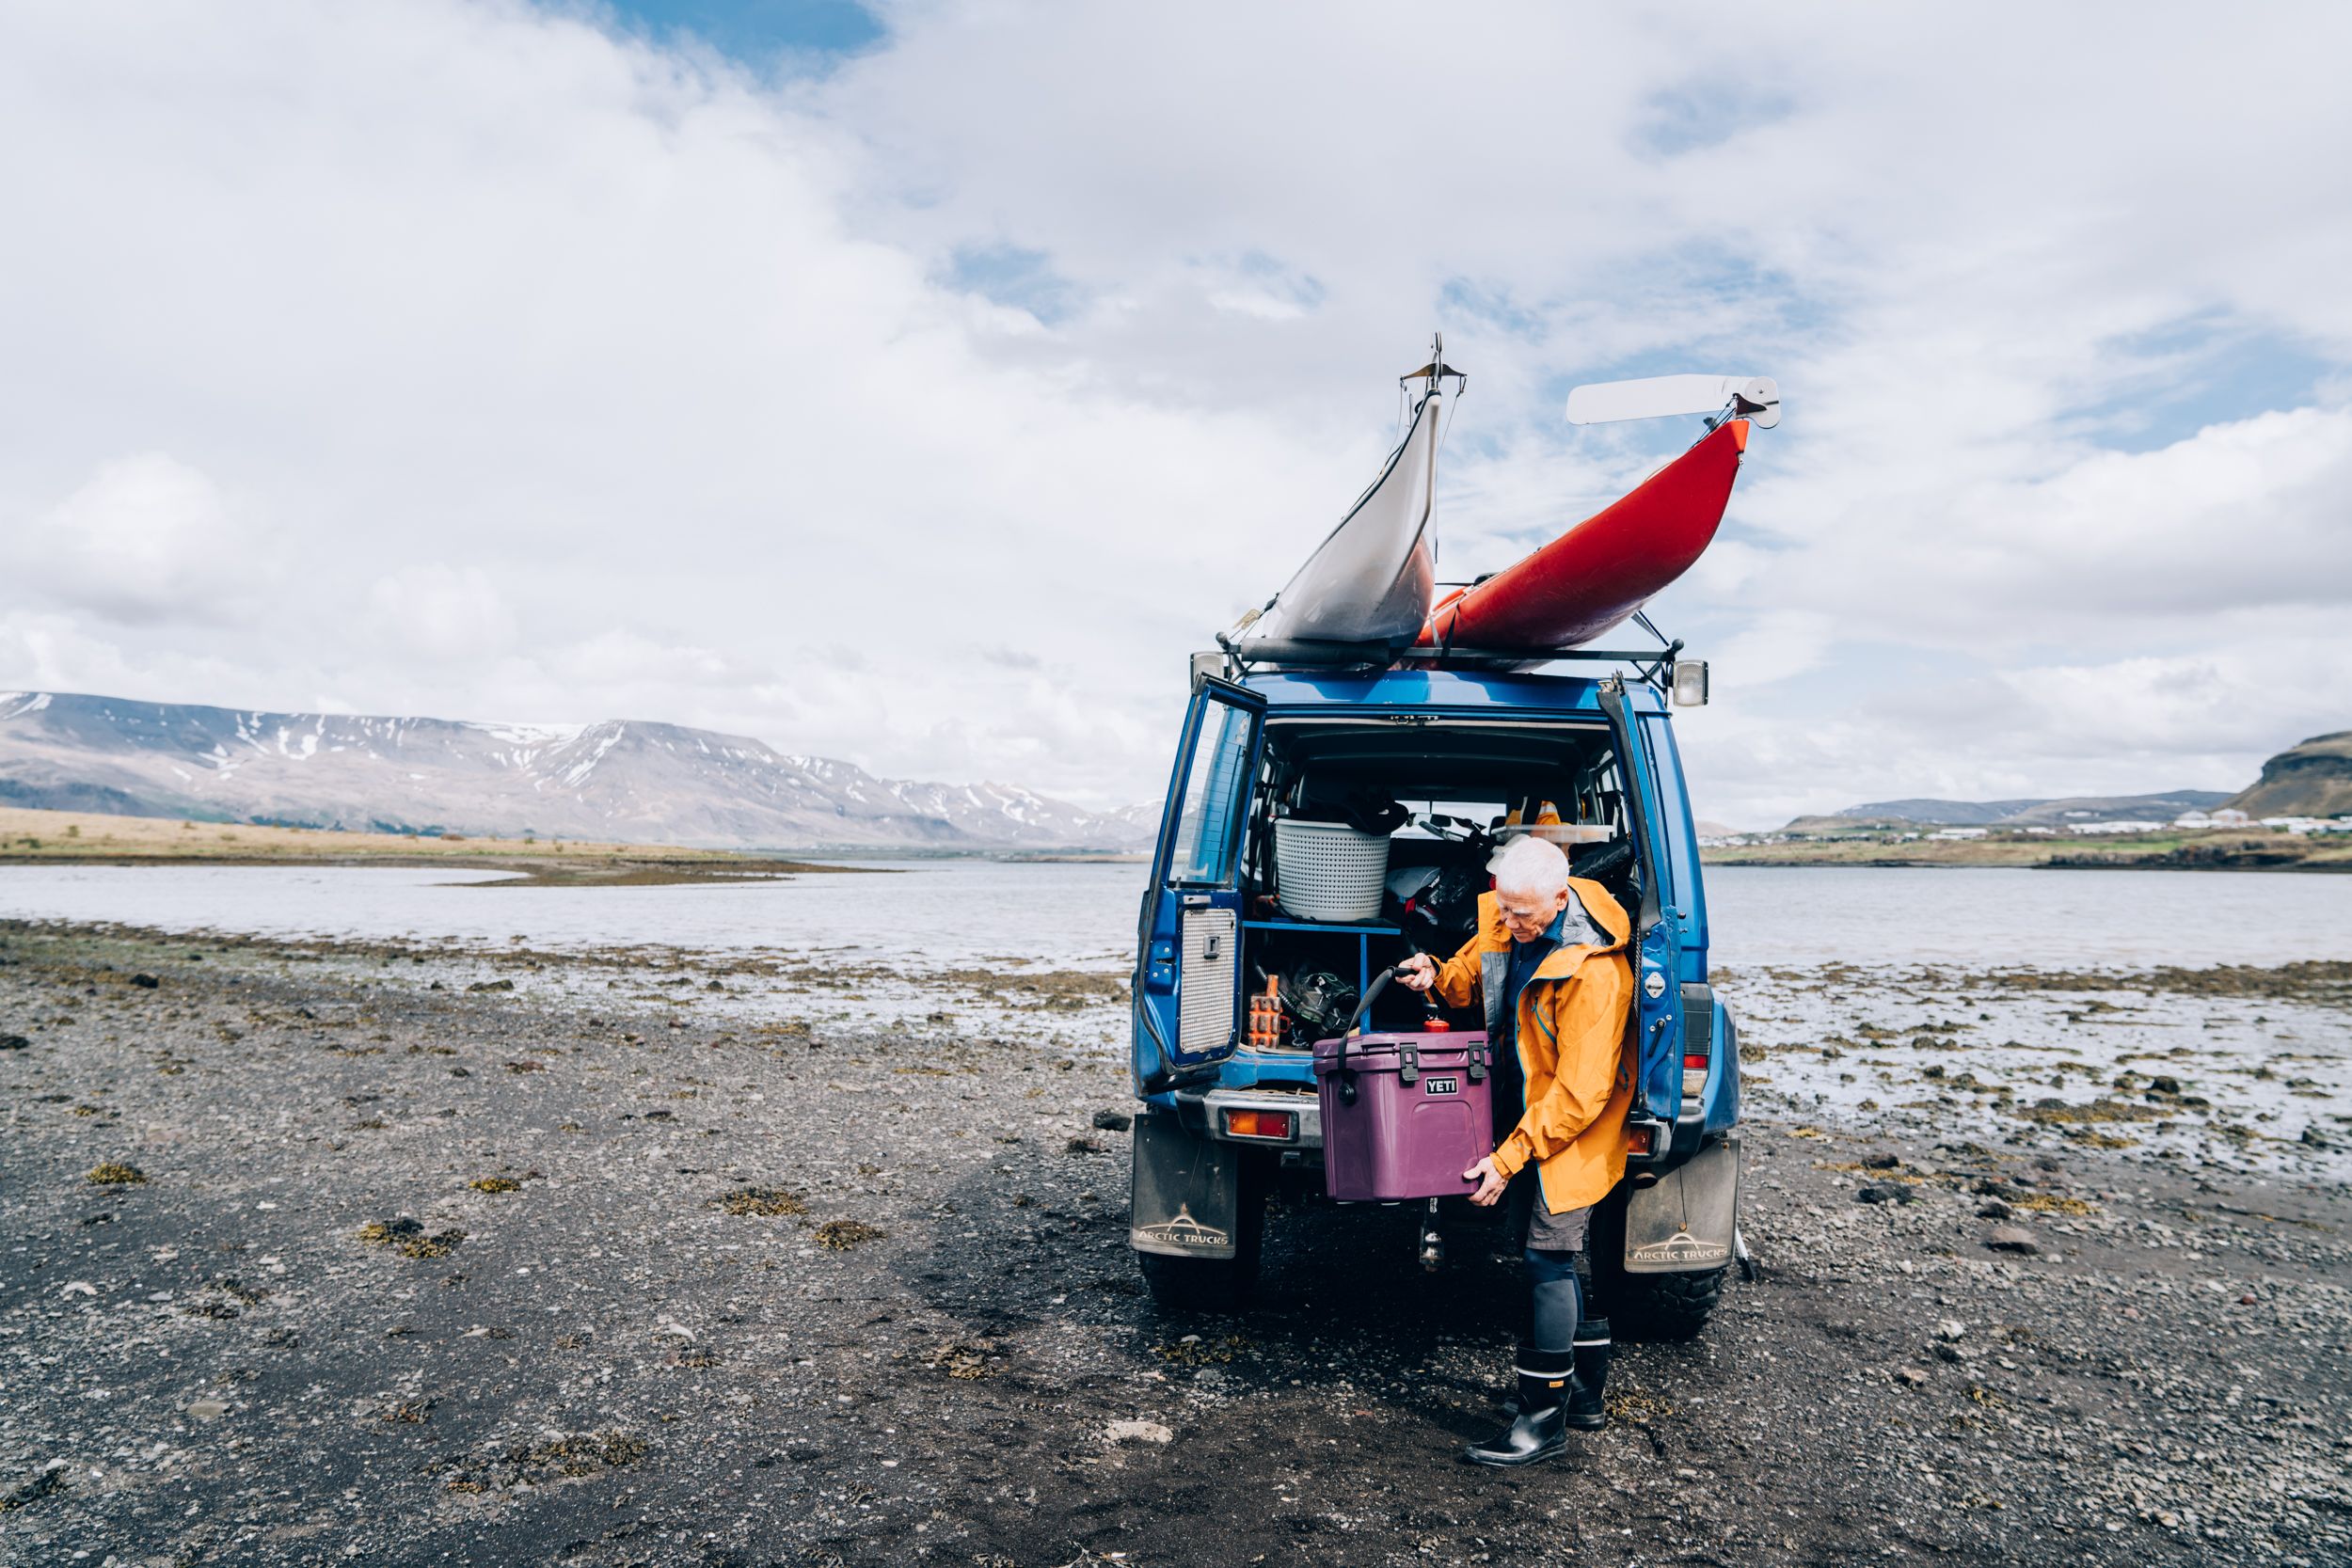 Yeti - Roadie 24 Hard Cooler - Nordic Purple – Haven Surf